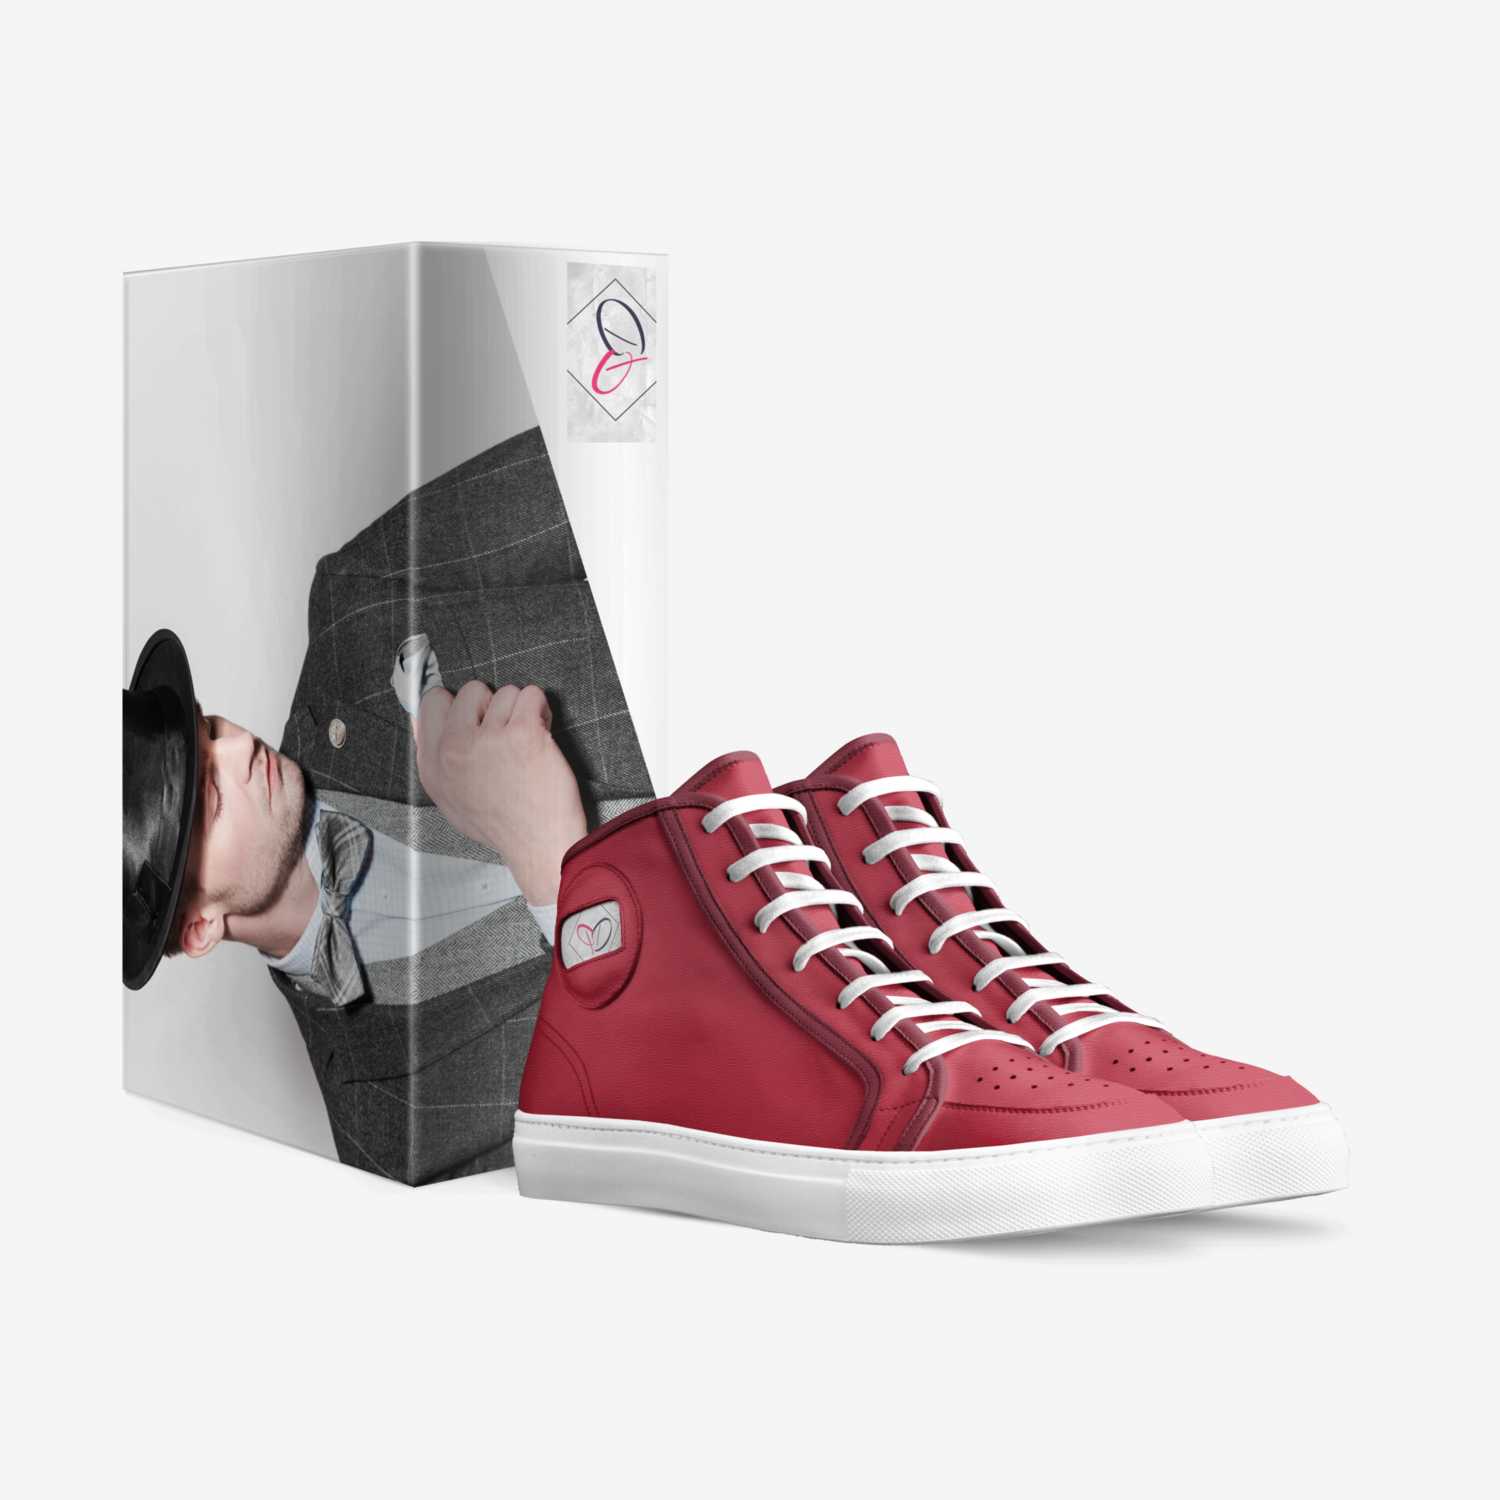 Gentleman custom made in Italy shoes by Ldv Ldv | Box view